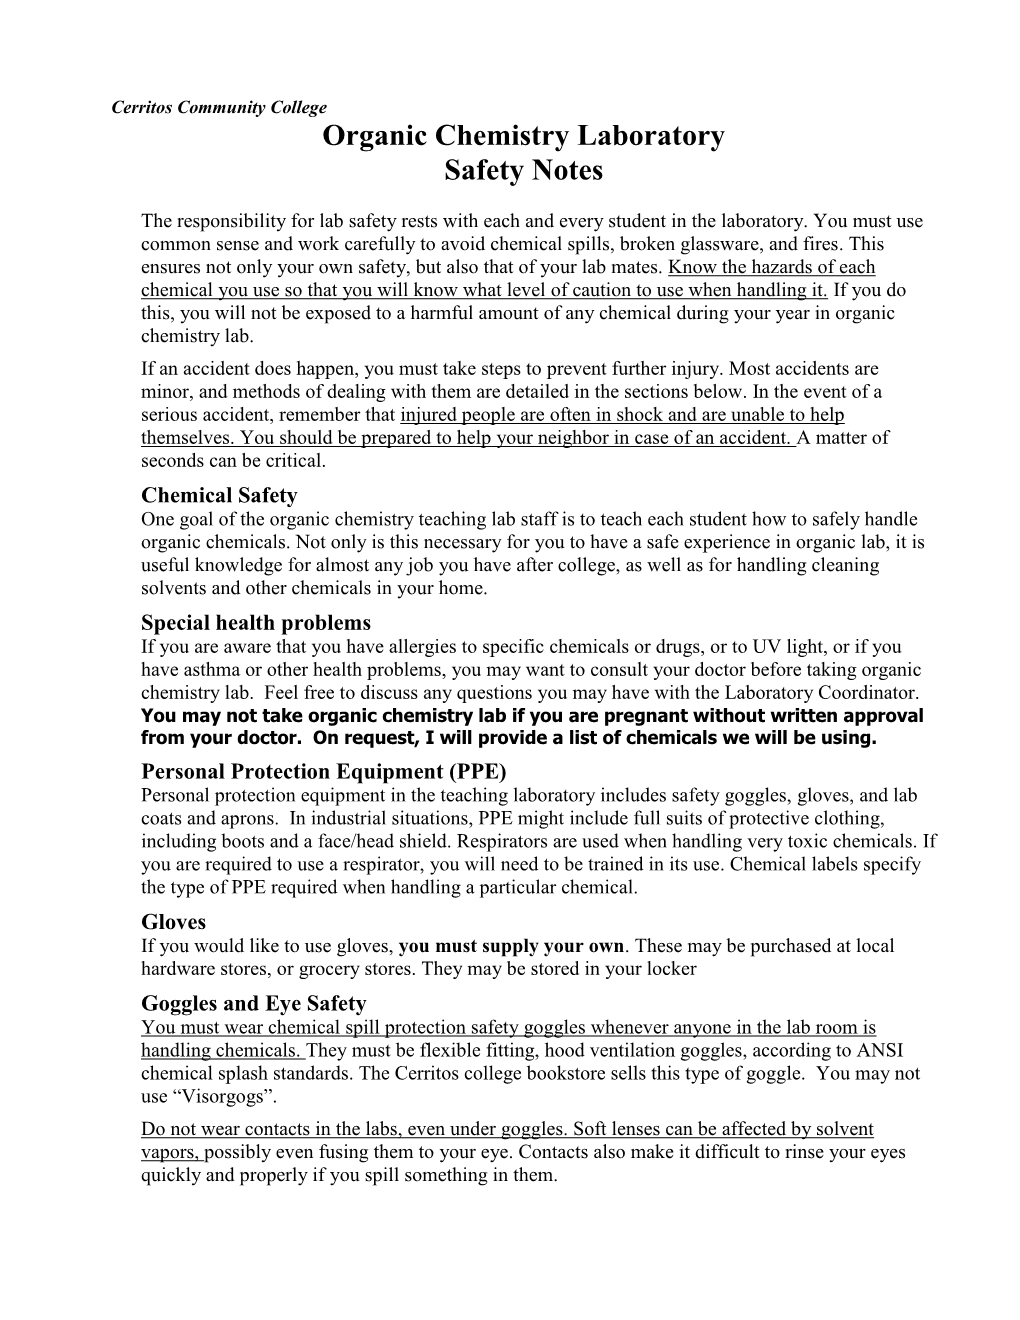 Organic Chemistry Laboratory Safety Notes